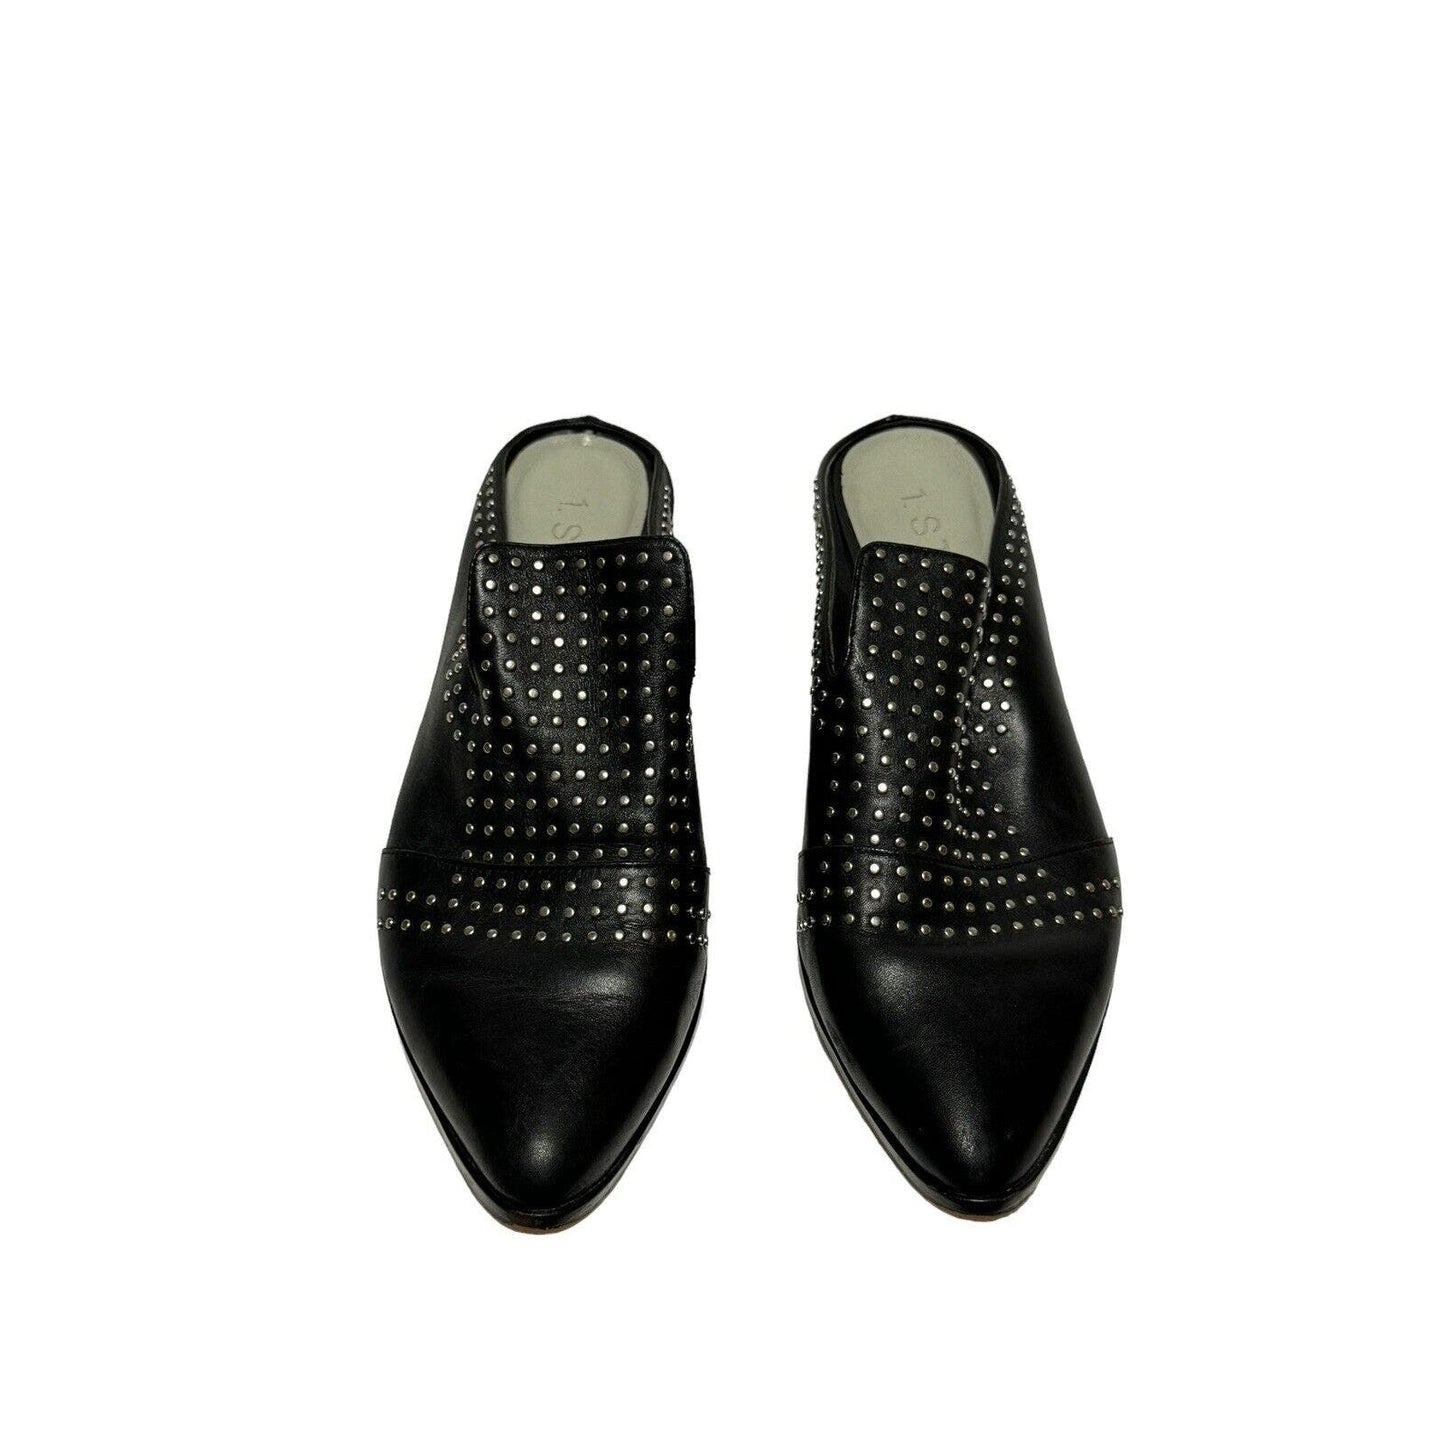 1 State Lon Studded Black Slip On Mules Size 8.5 M